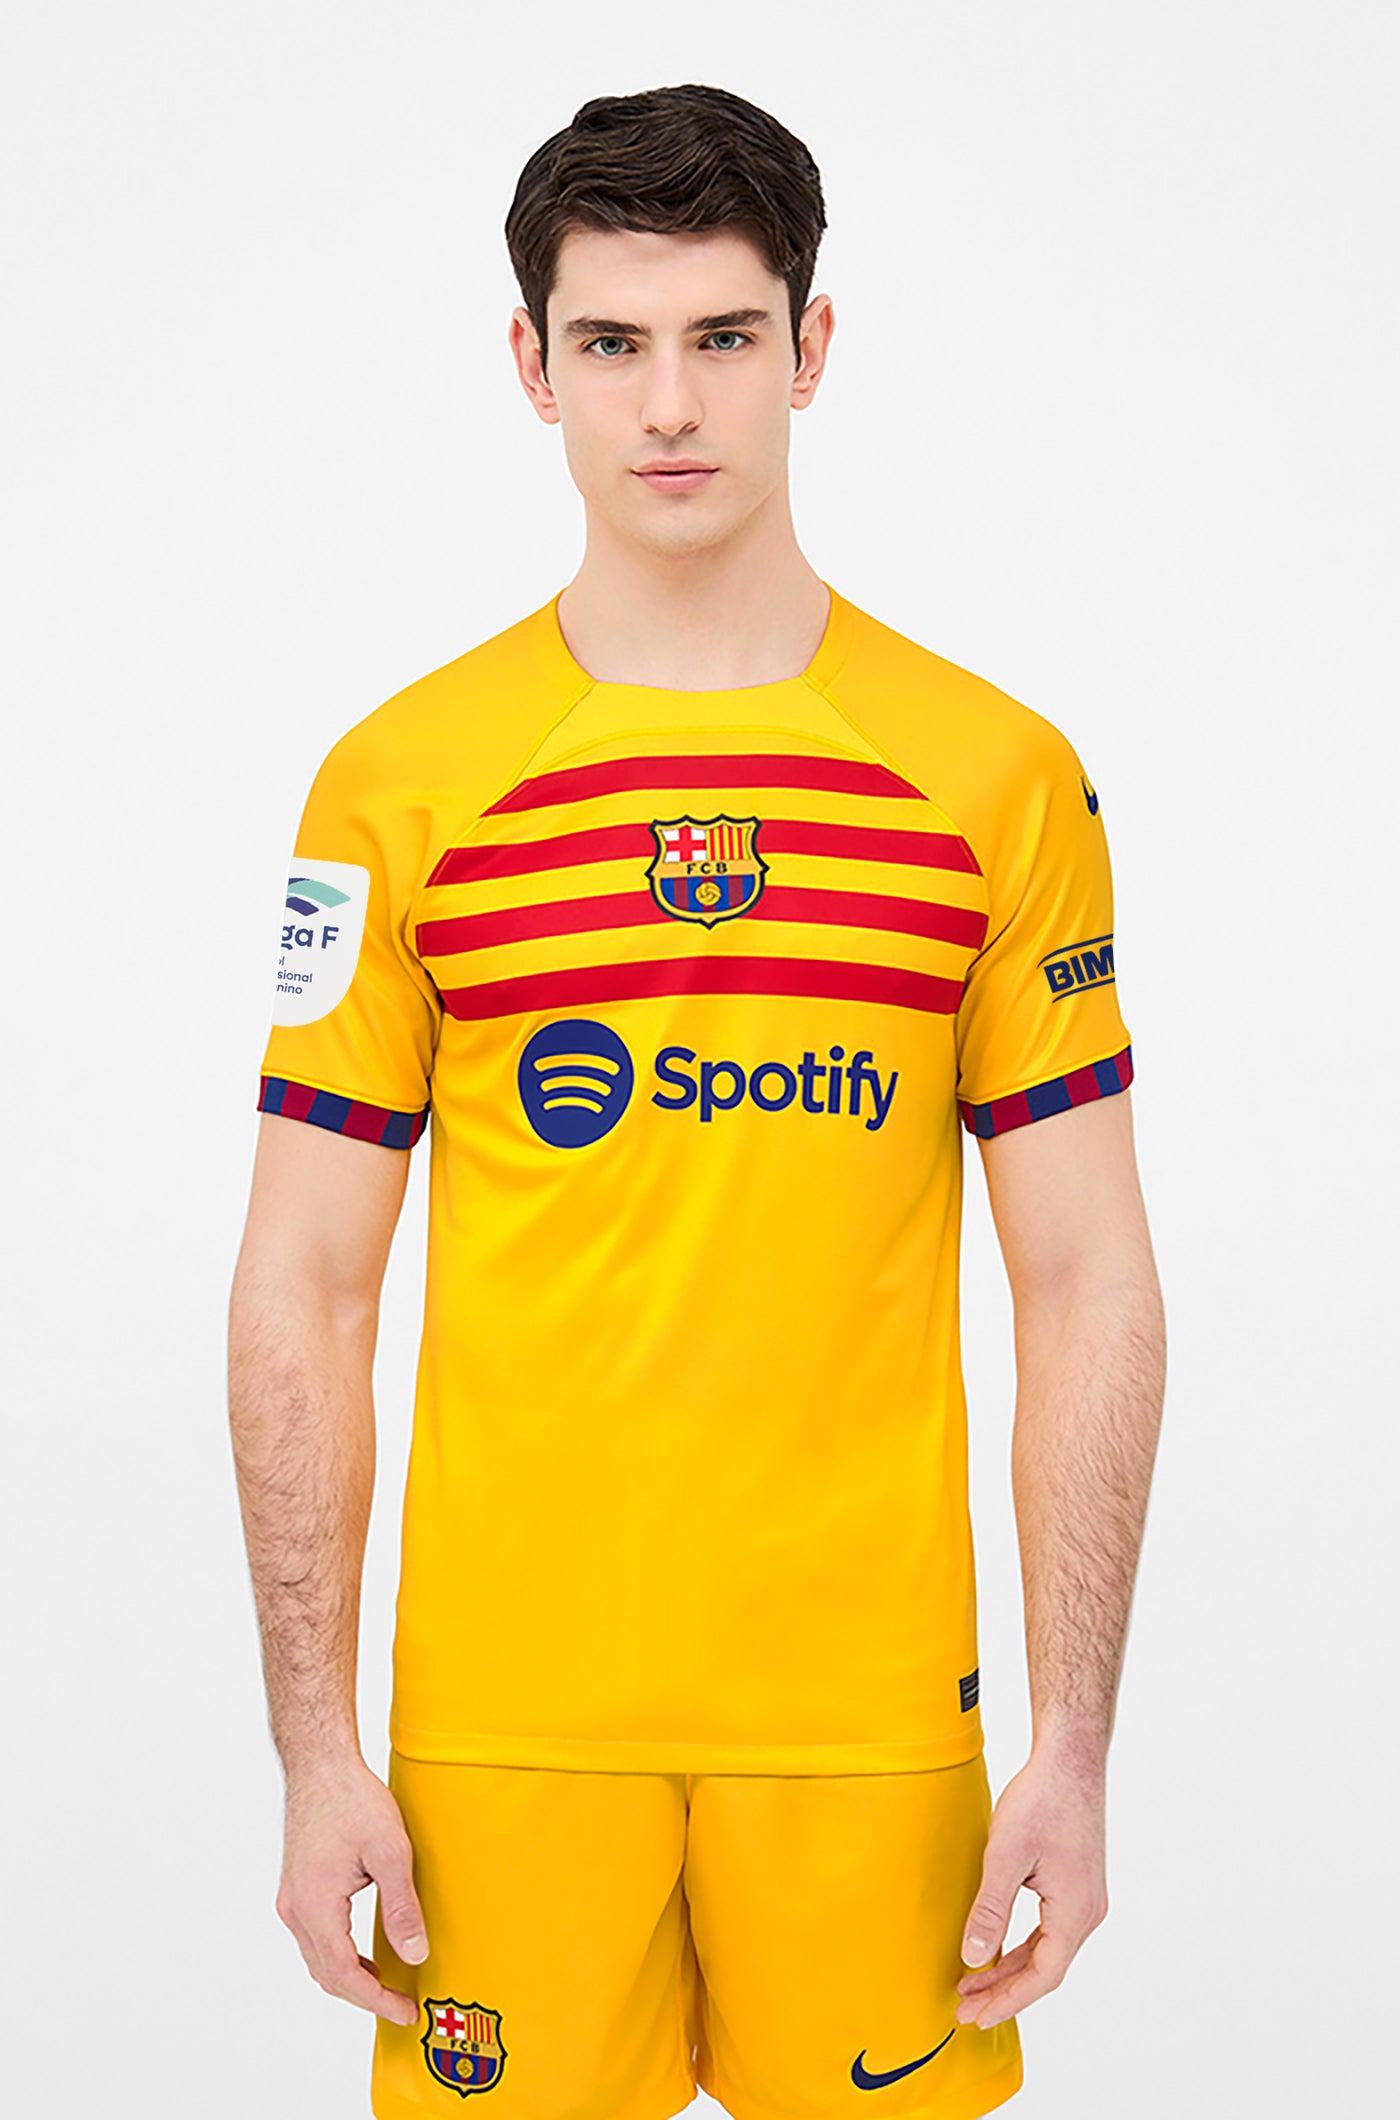 Liga F FC Barcelona fourth shirt 23/24 – Men - BRUGTS